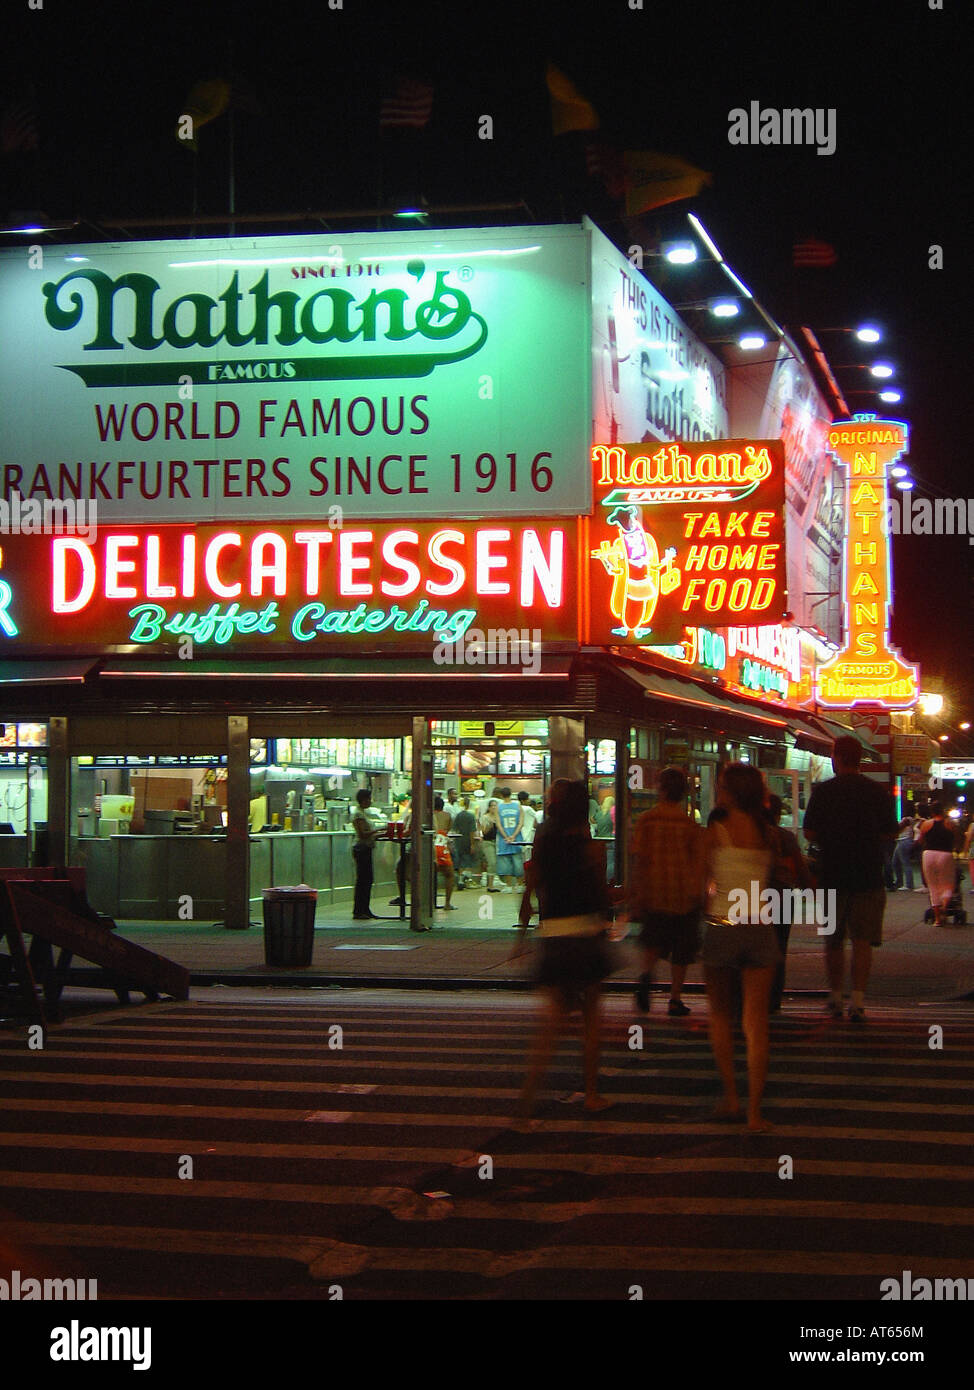 Night Time Scene of Nathans World Famous Frankfurter Hotdog Stand in ...